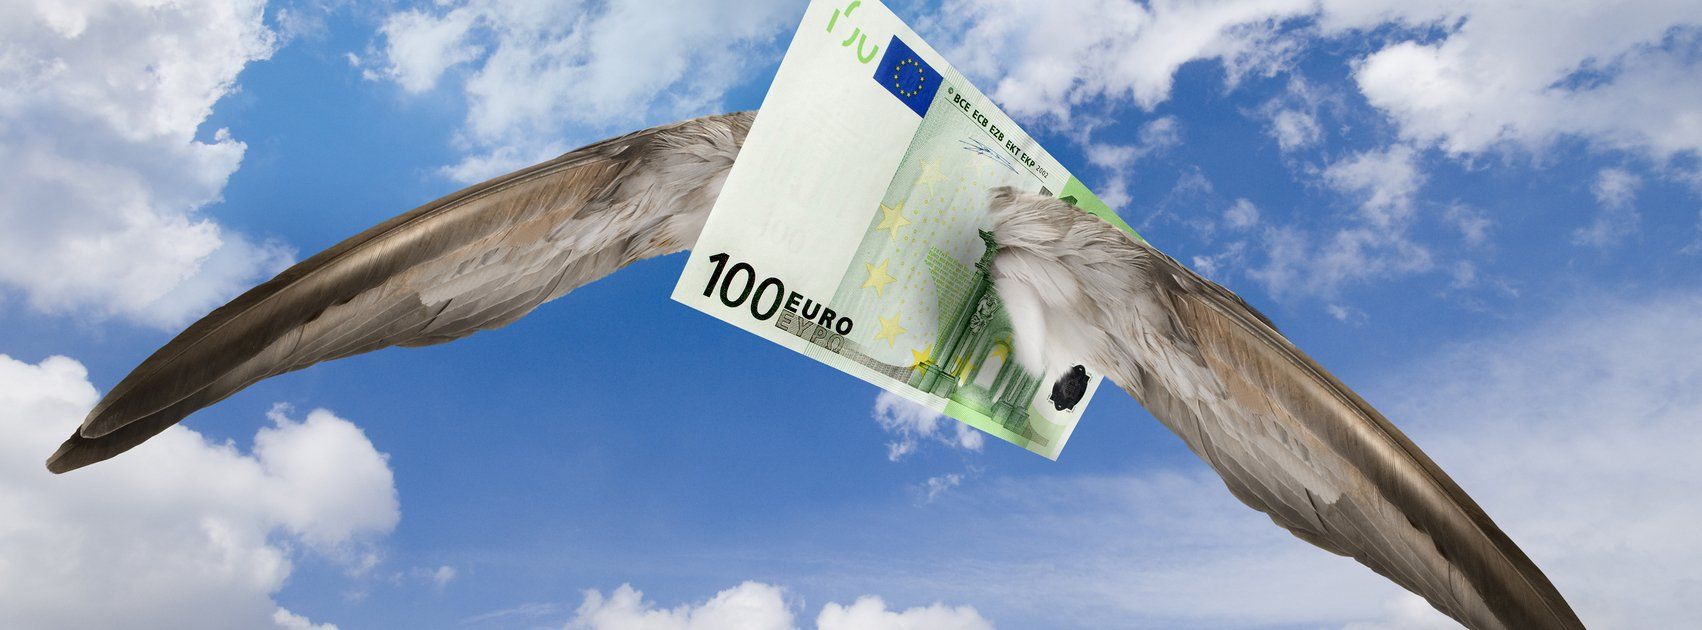 100 euro biljet met vleugels